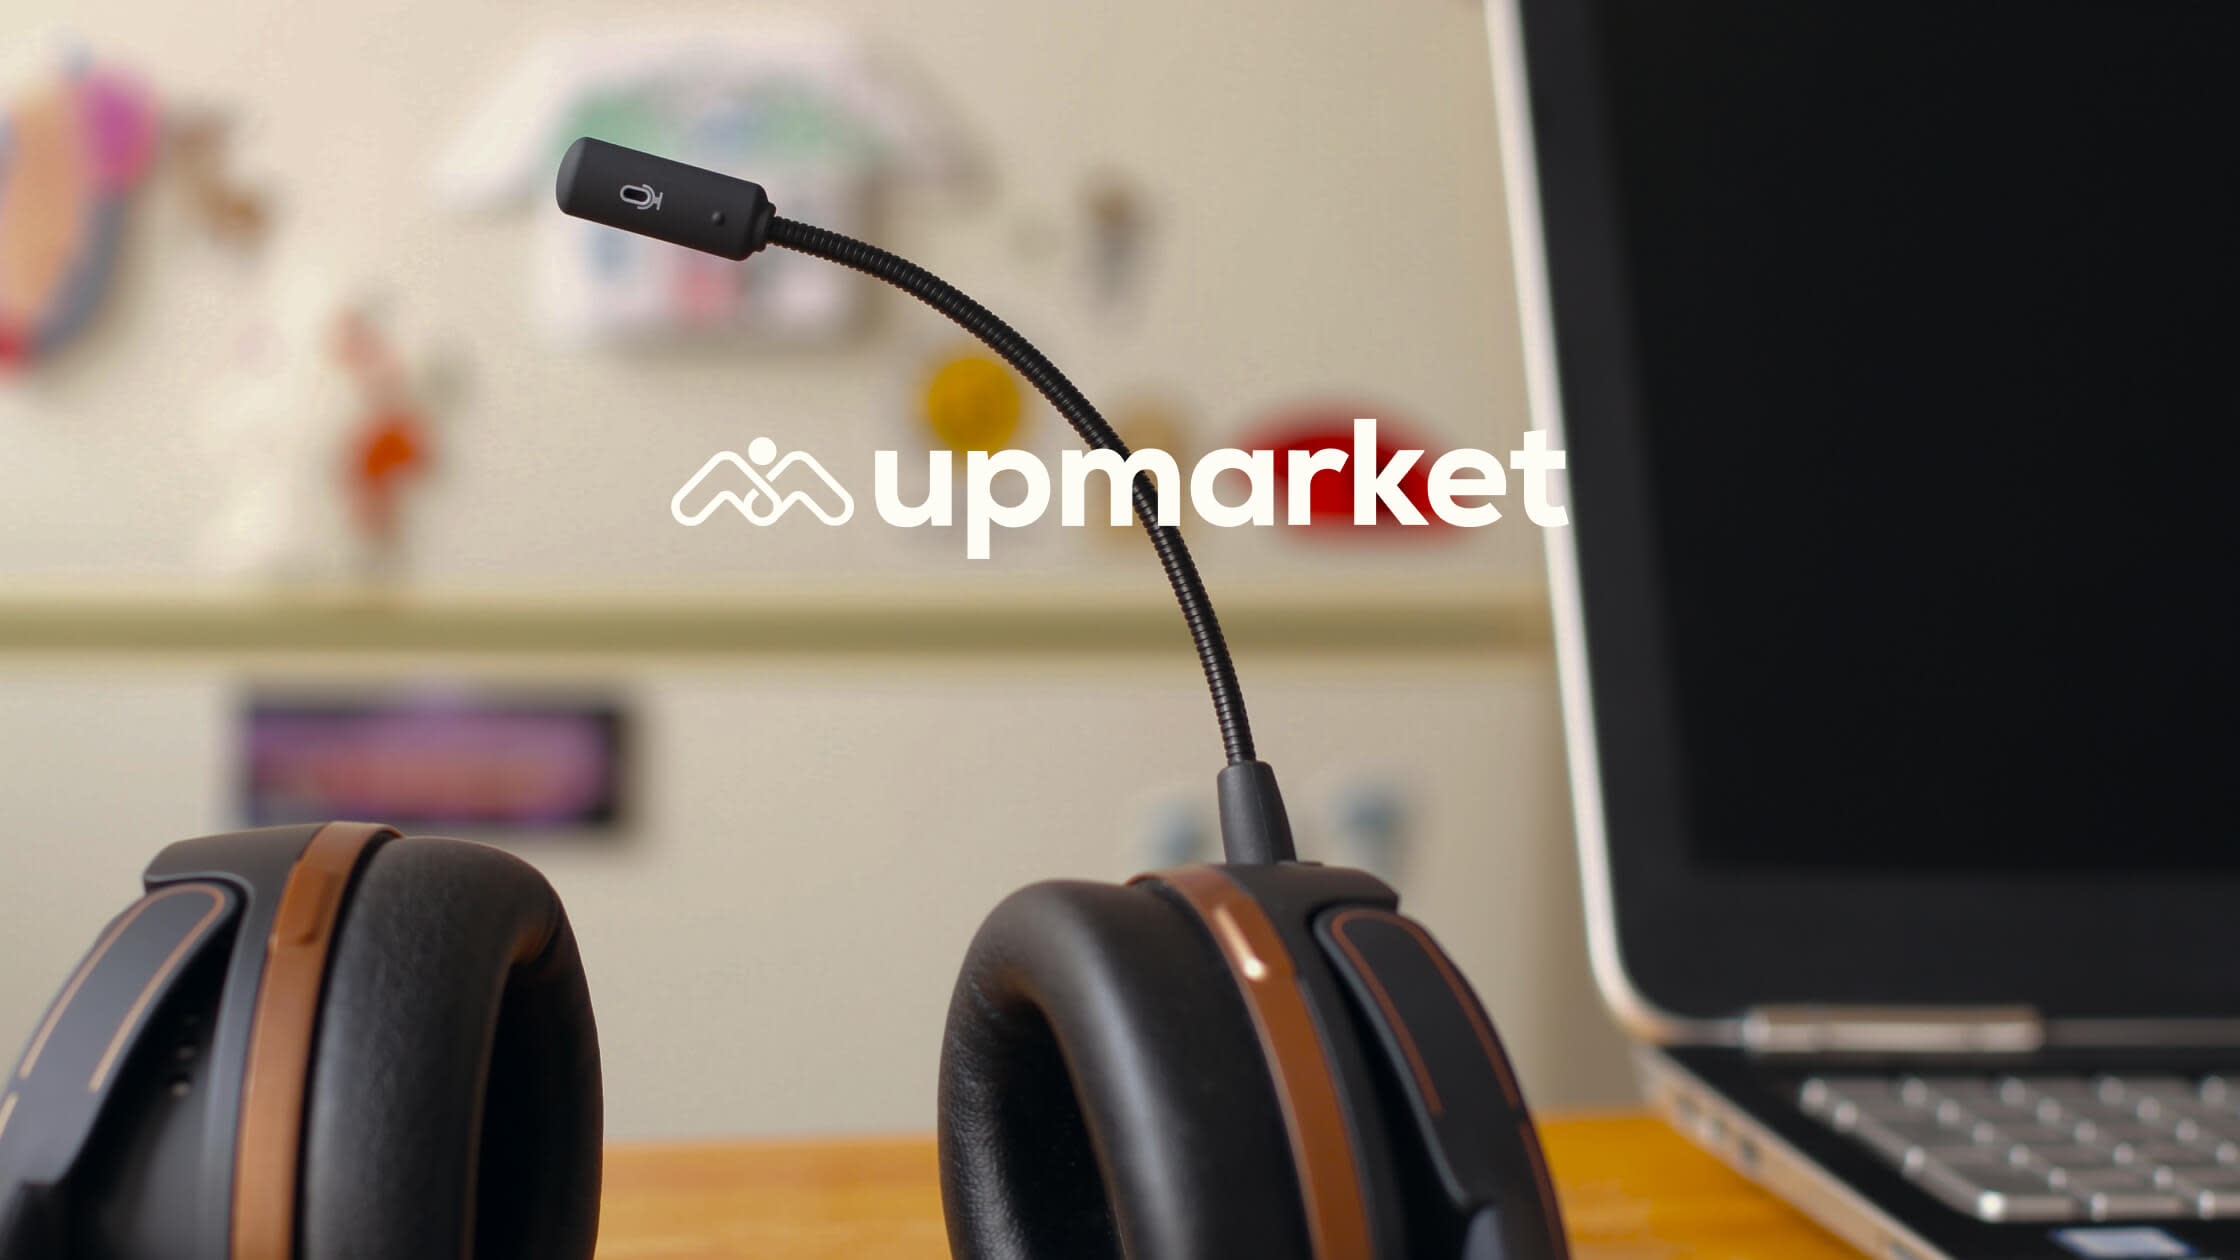 Upmarket logo and laptop on desk